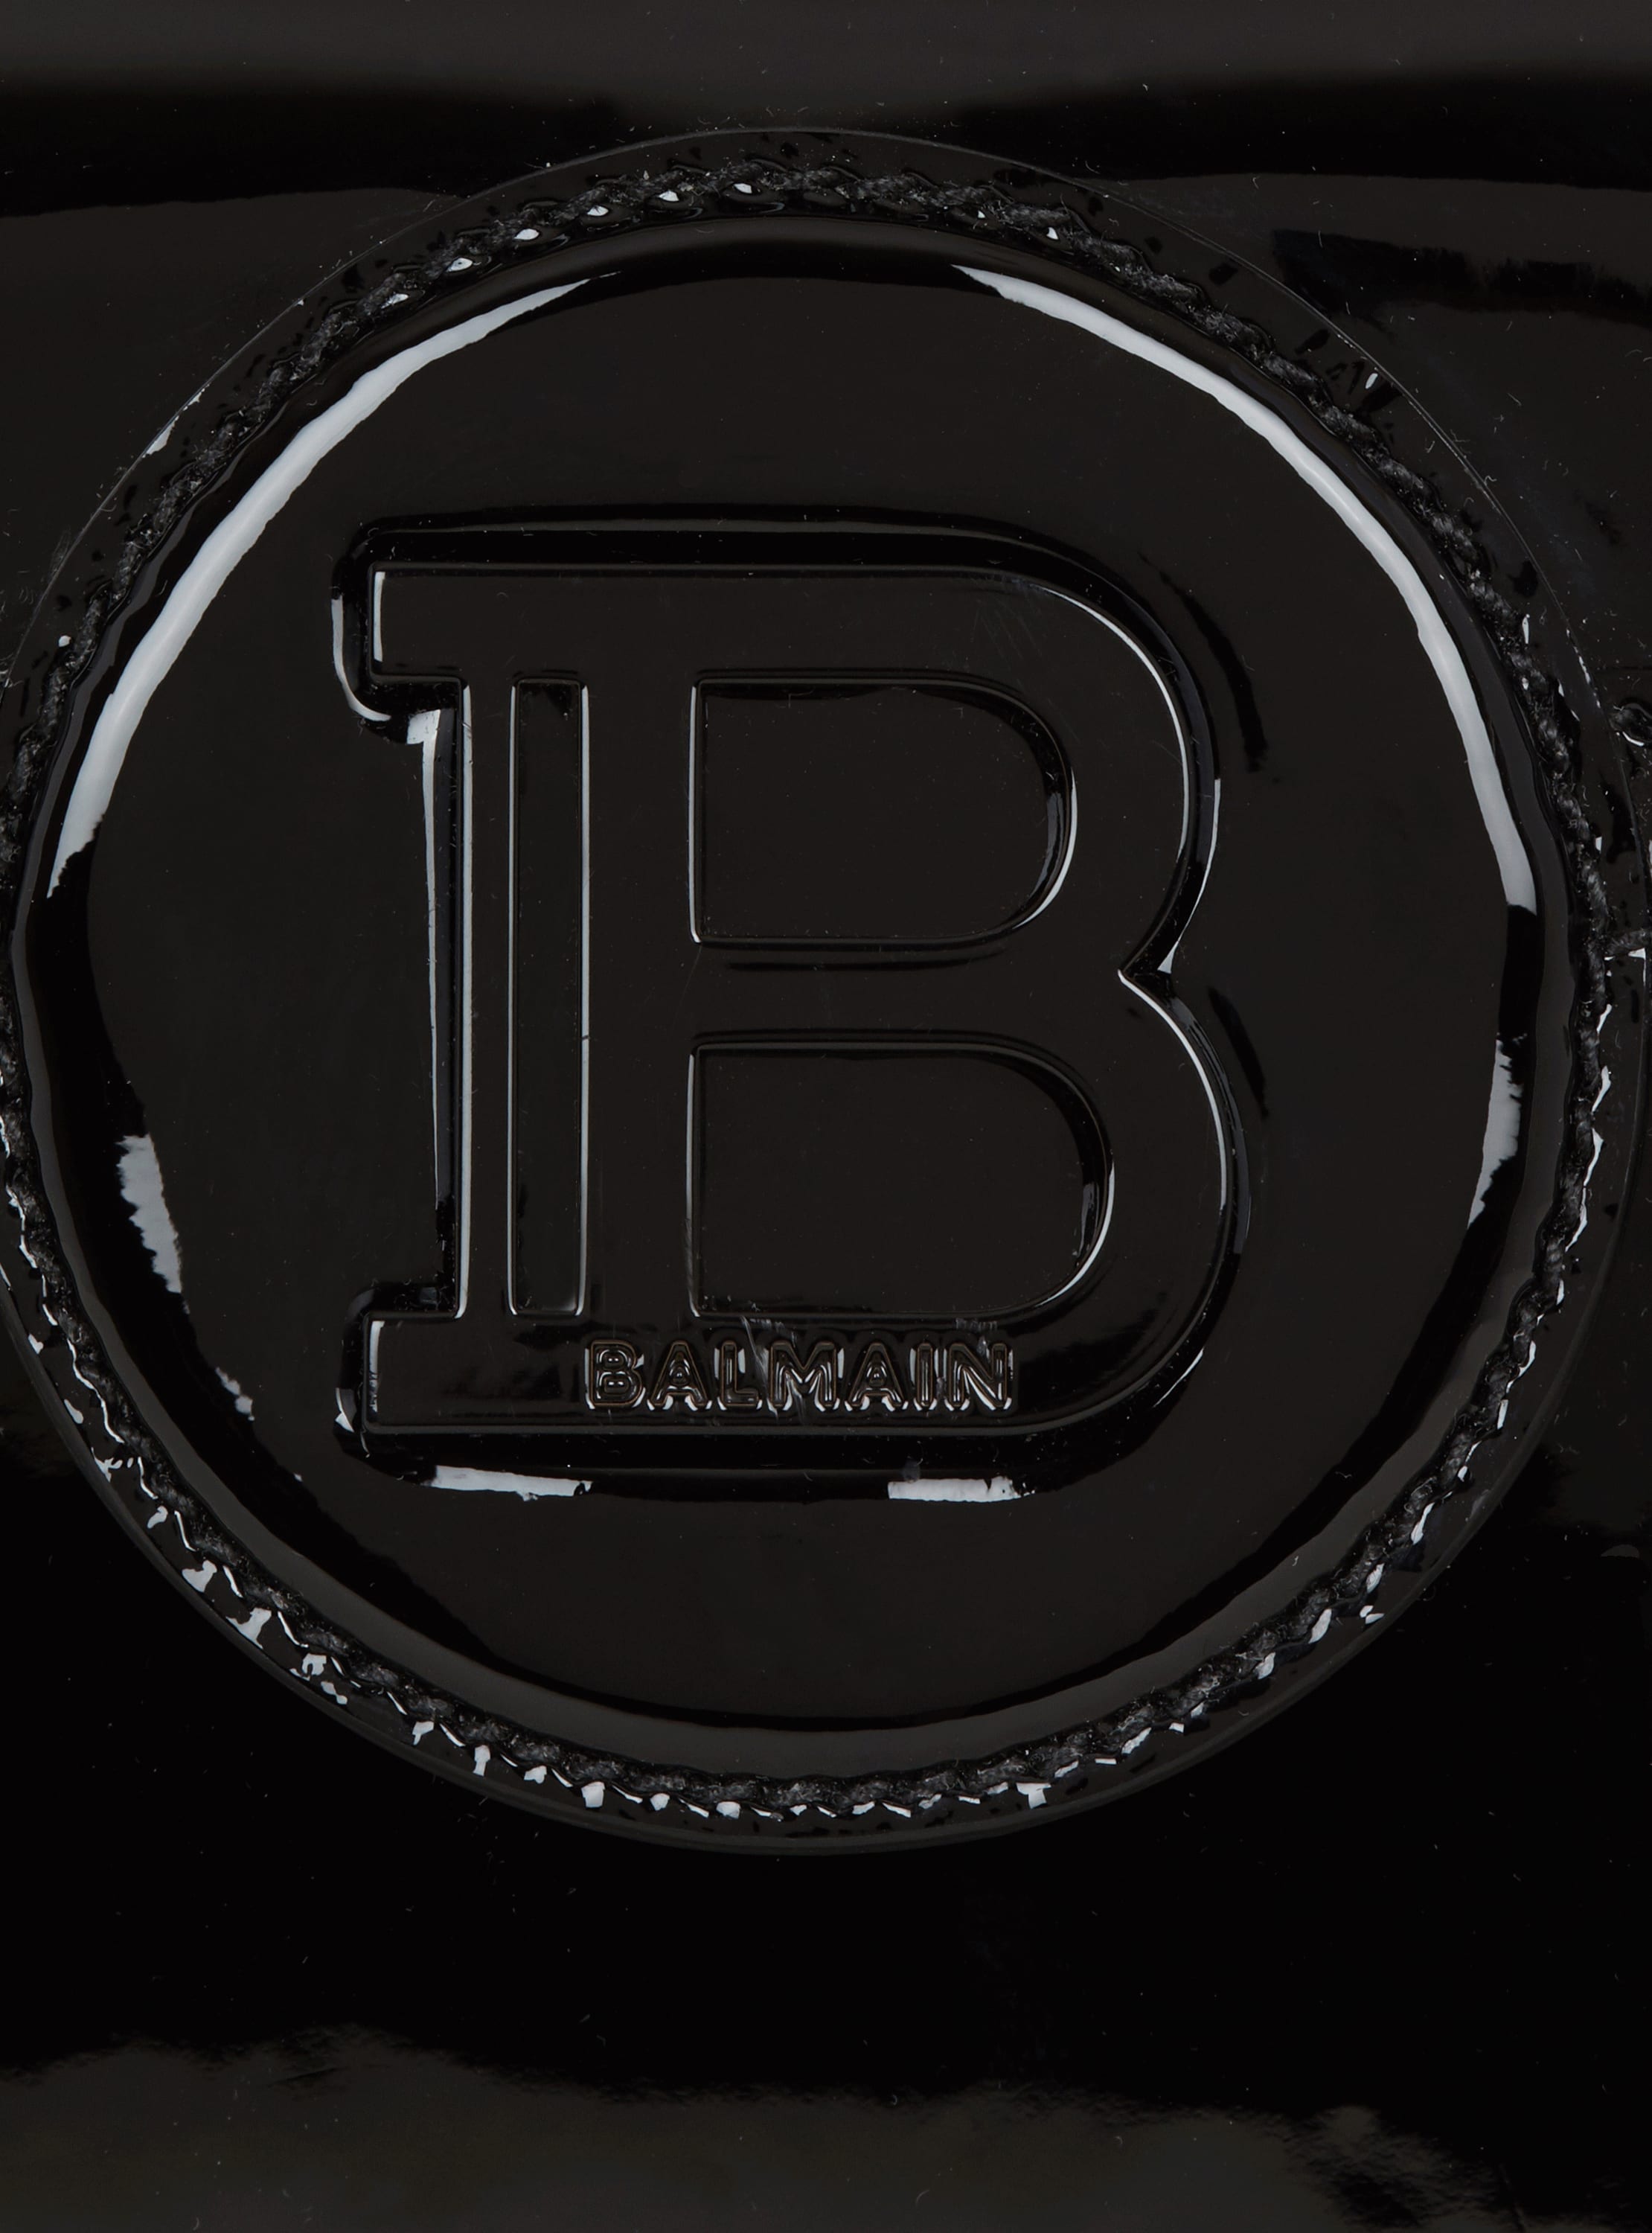 Balmain logo-plaque Leather Shoulder Bag - Black